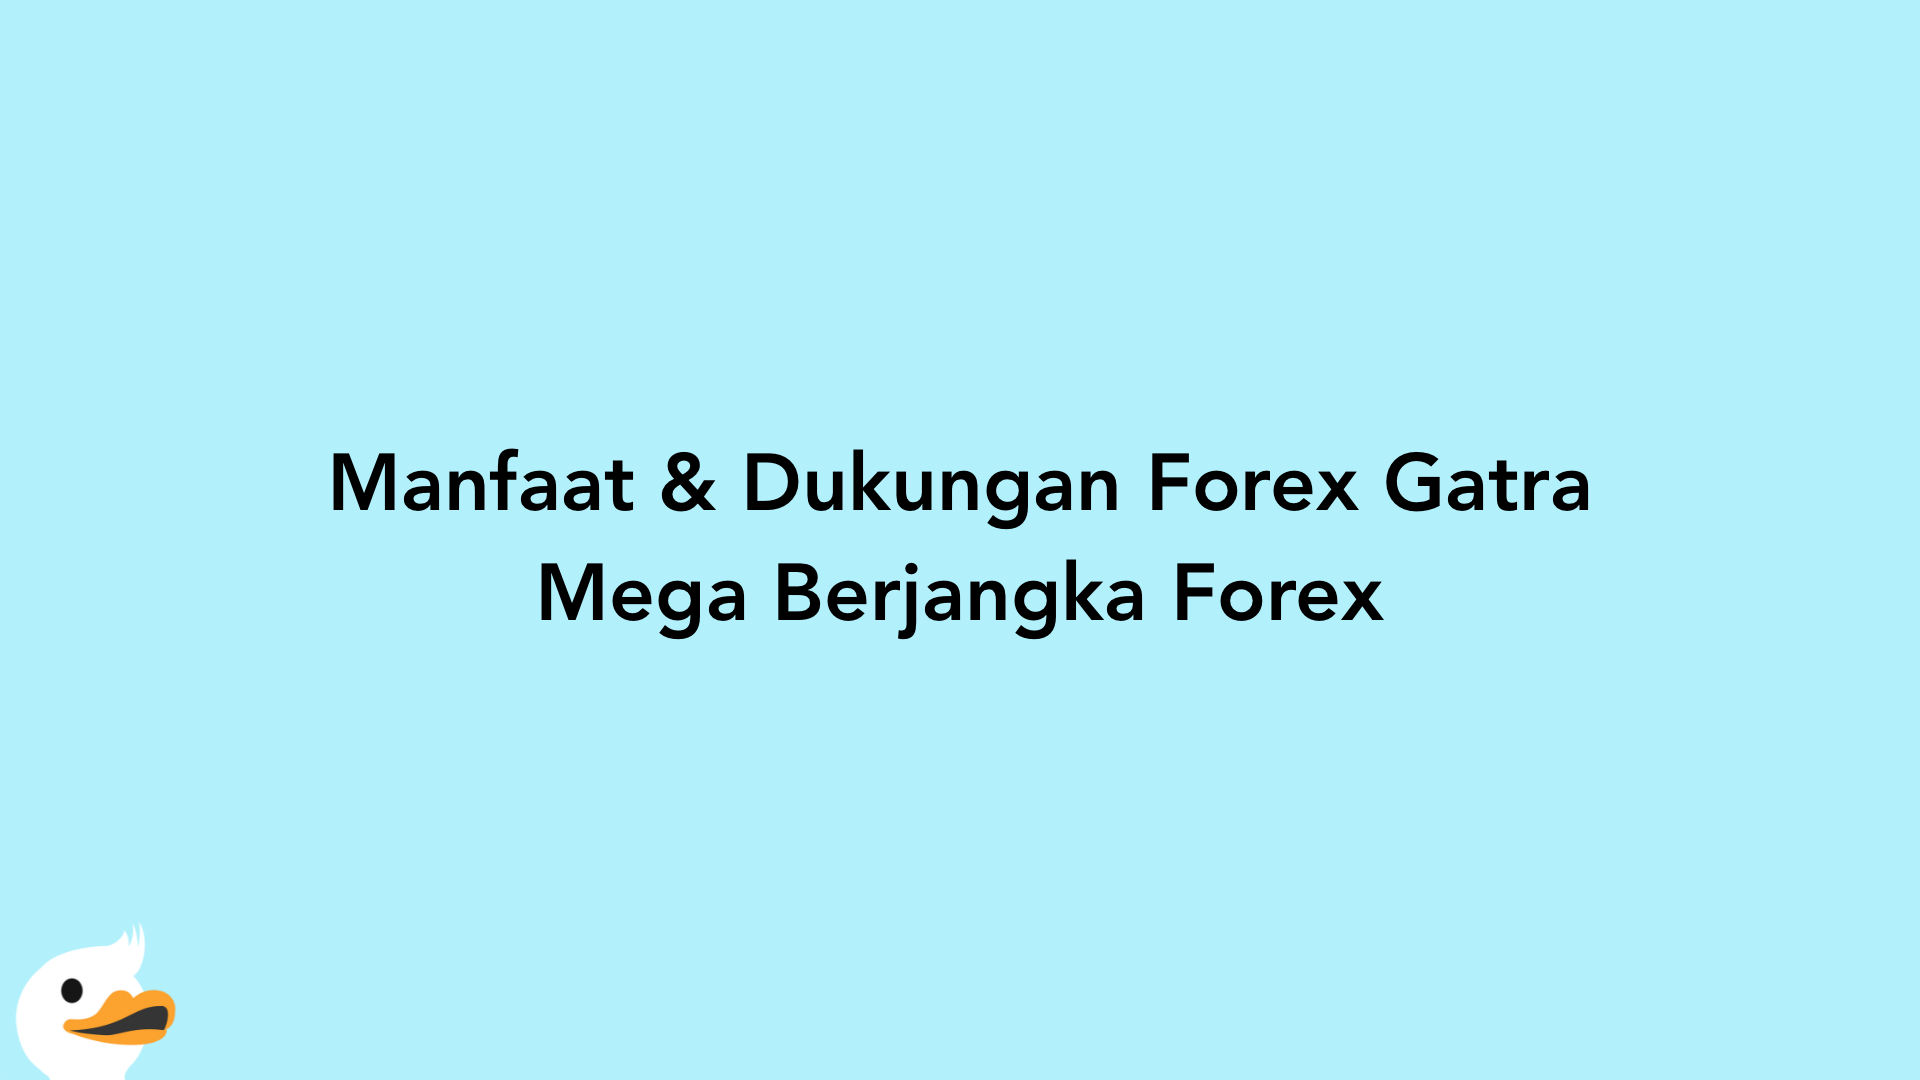 Manfaat & Dukungan Forex Gatra Mega Berjangka Forex